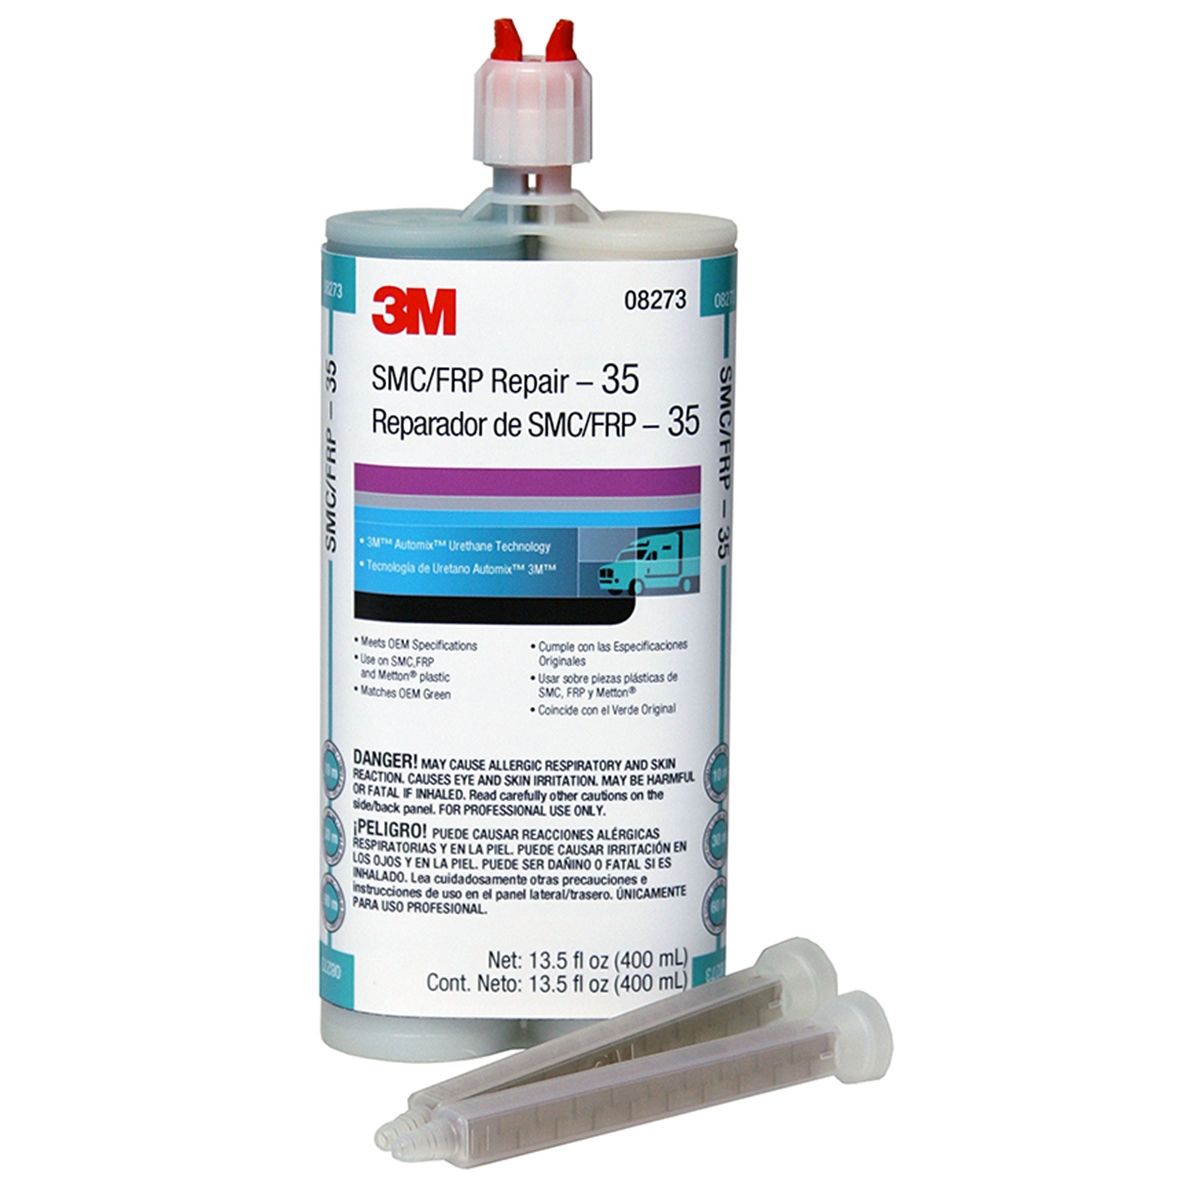 Urethane Adhesive for SMC/FRP Repair - 35, 400 mL